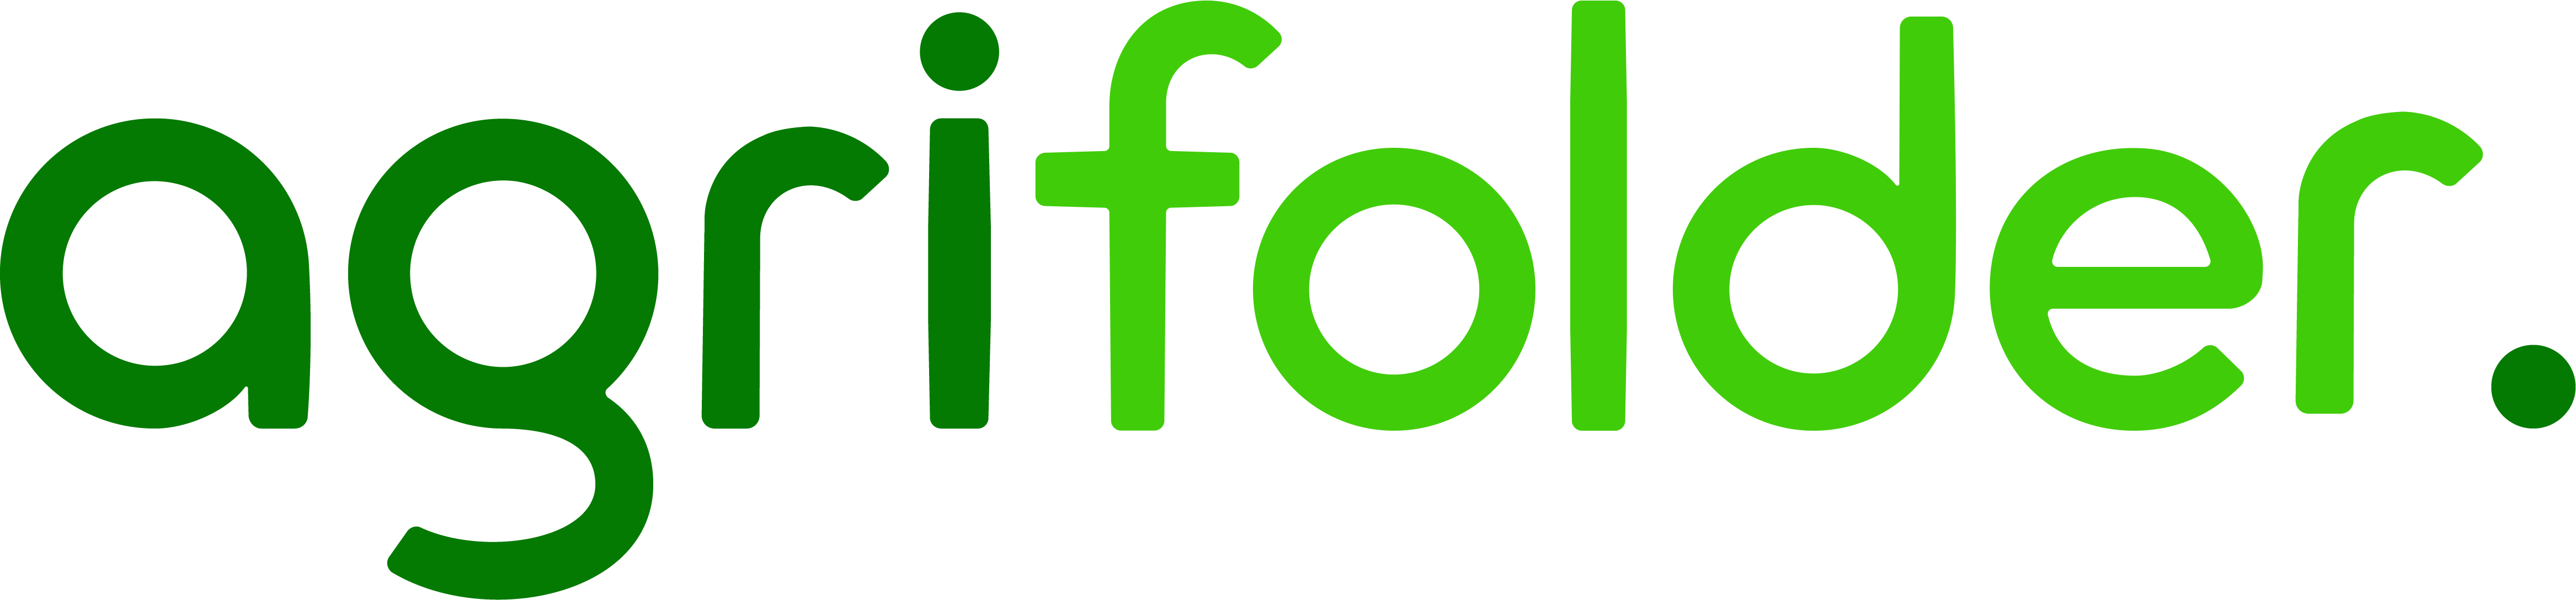 Agrifolder Logo